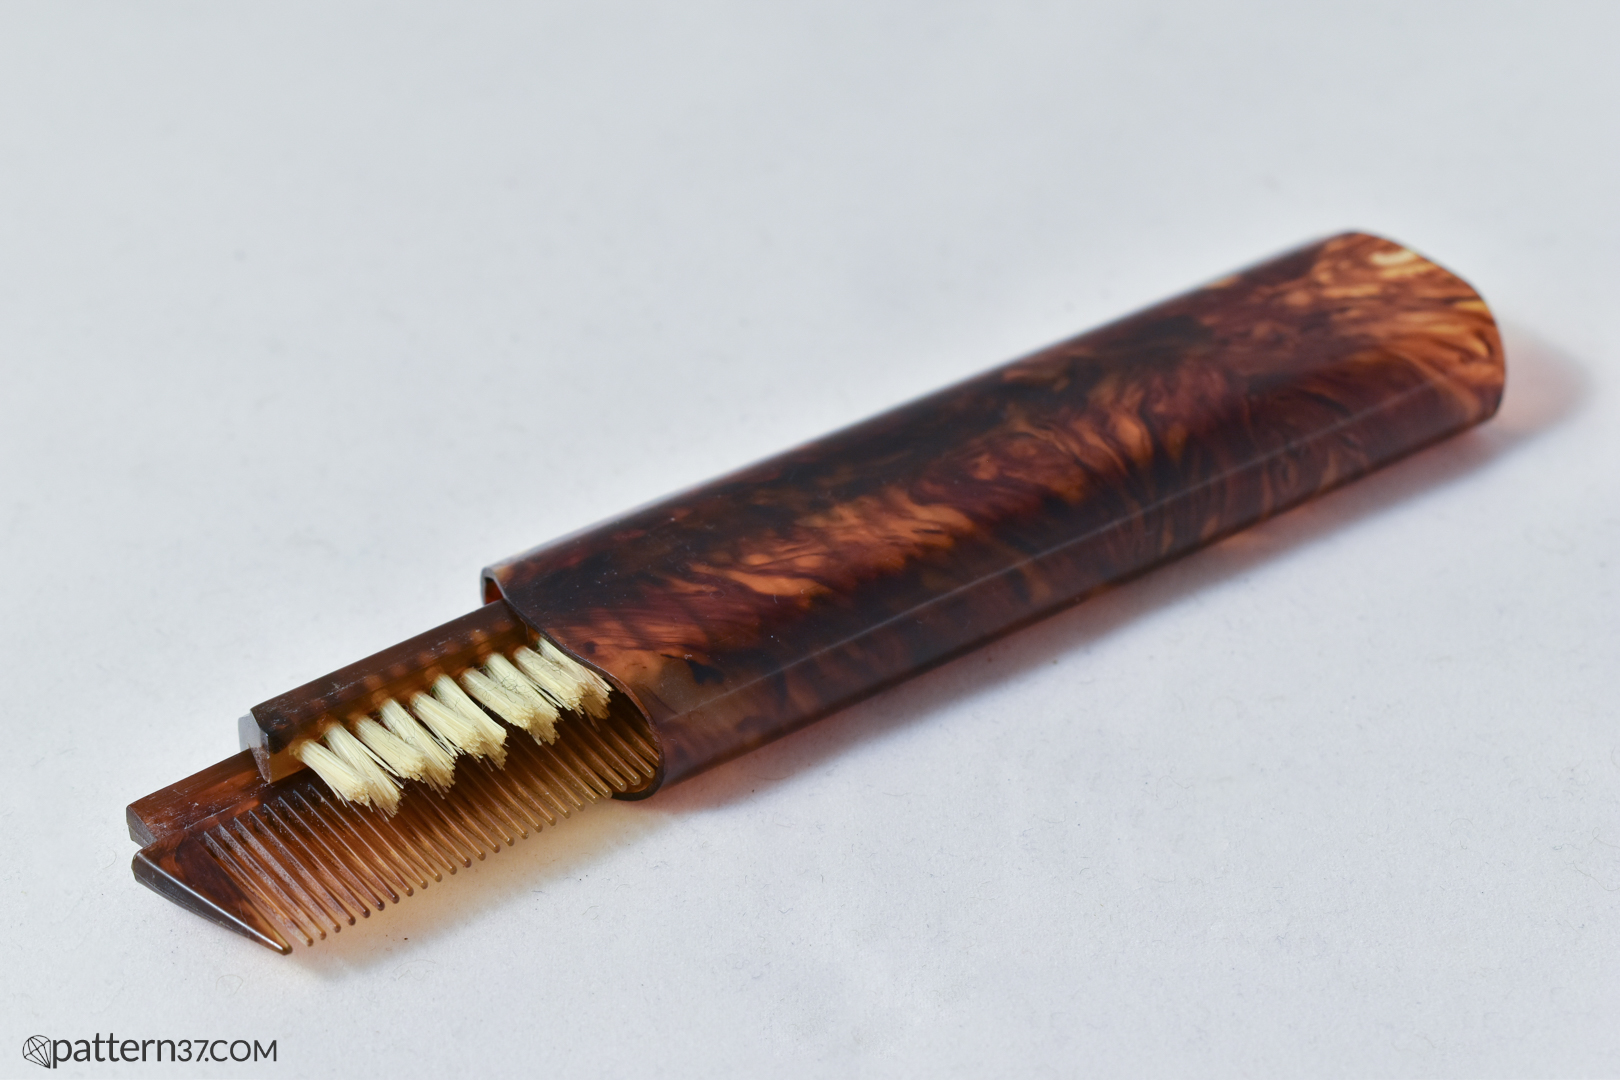 Bakelite comb and brush | pattern37.com